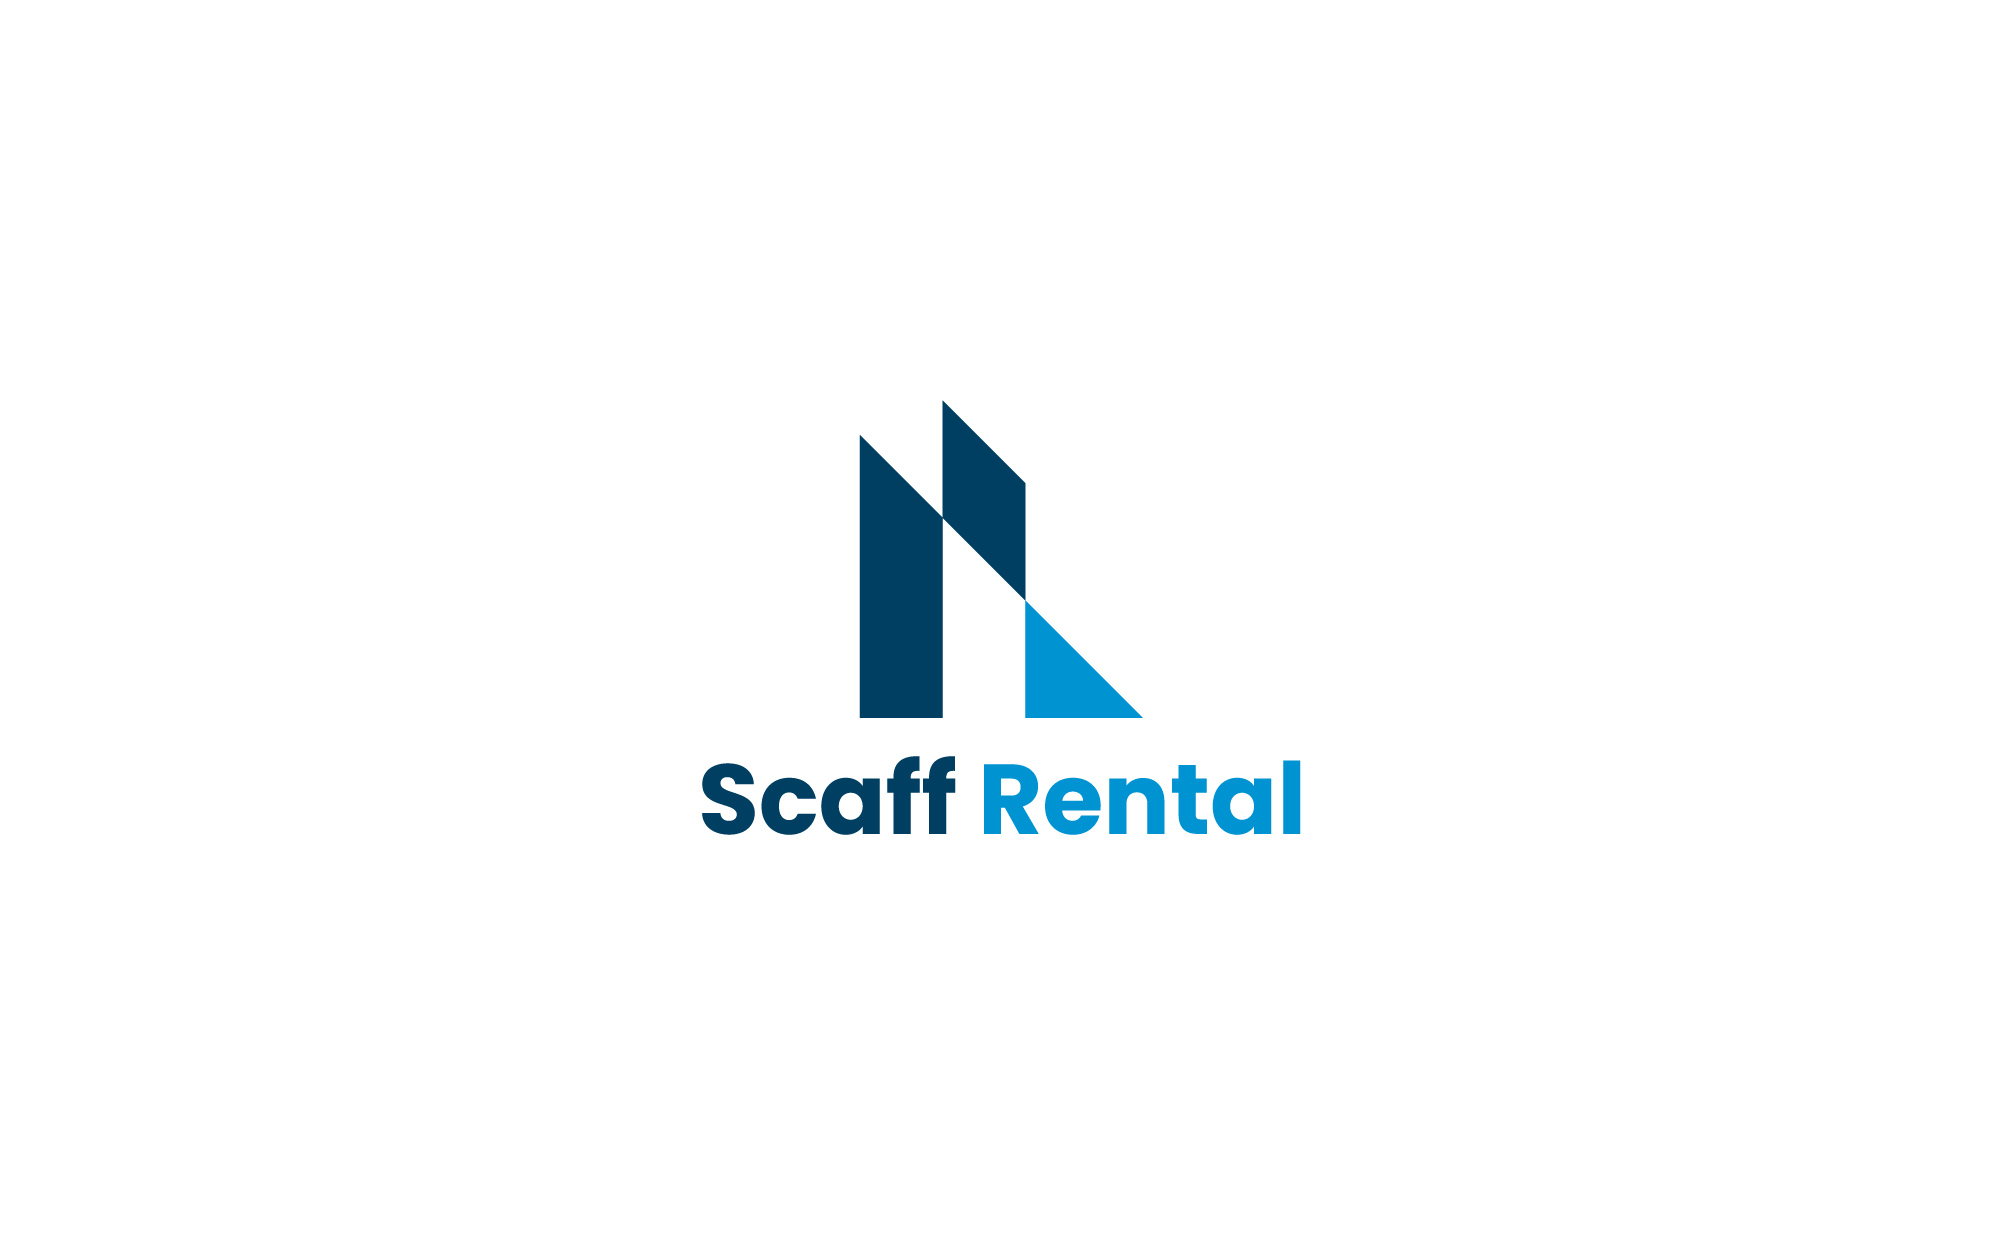 projekt logo scaff rental ver 4_Obszar roboczy 1